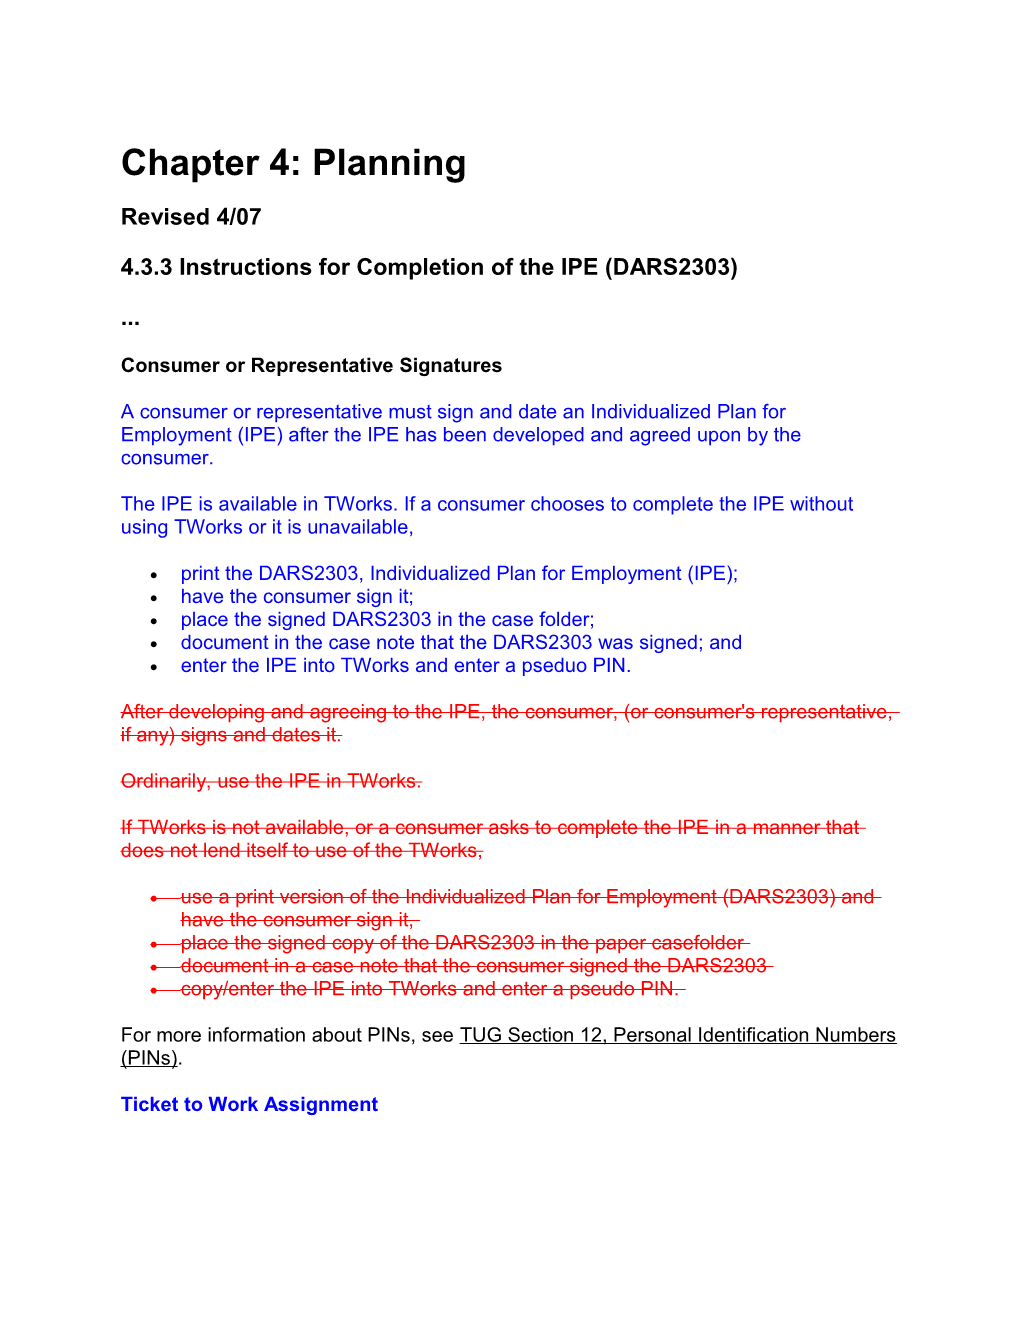 DBS VR Manual Chapter 4.3.3 Revision, April 2007